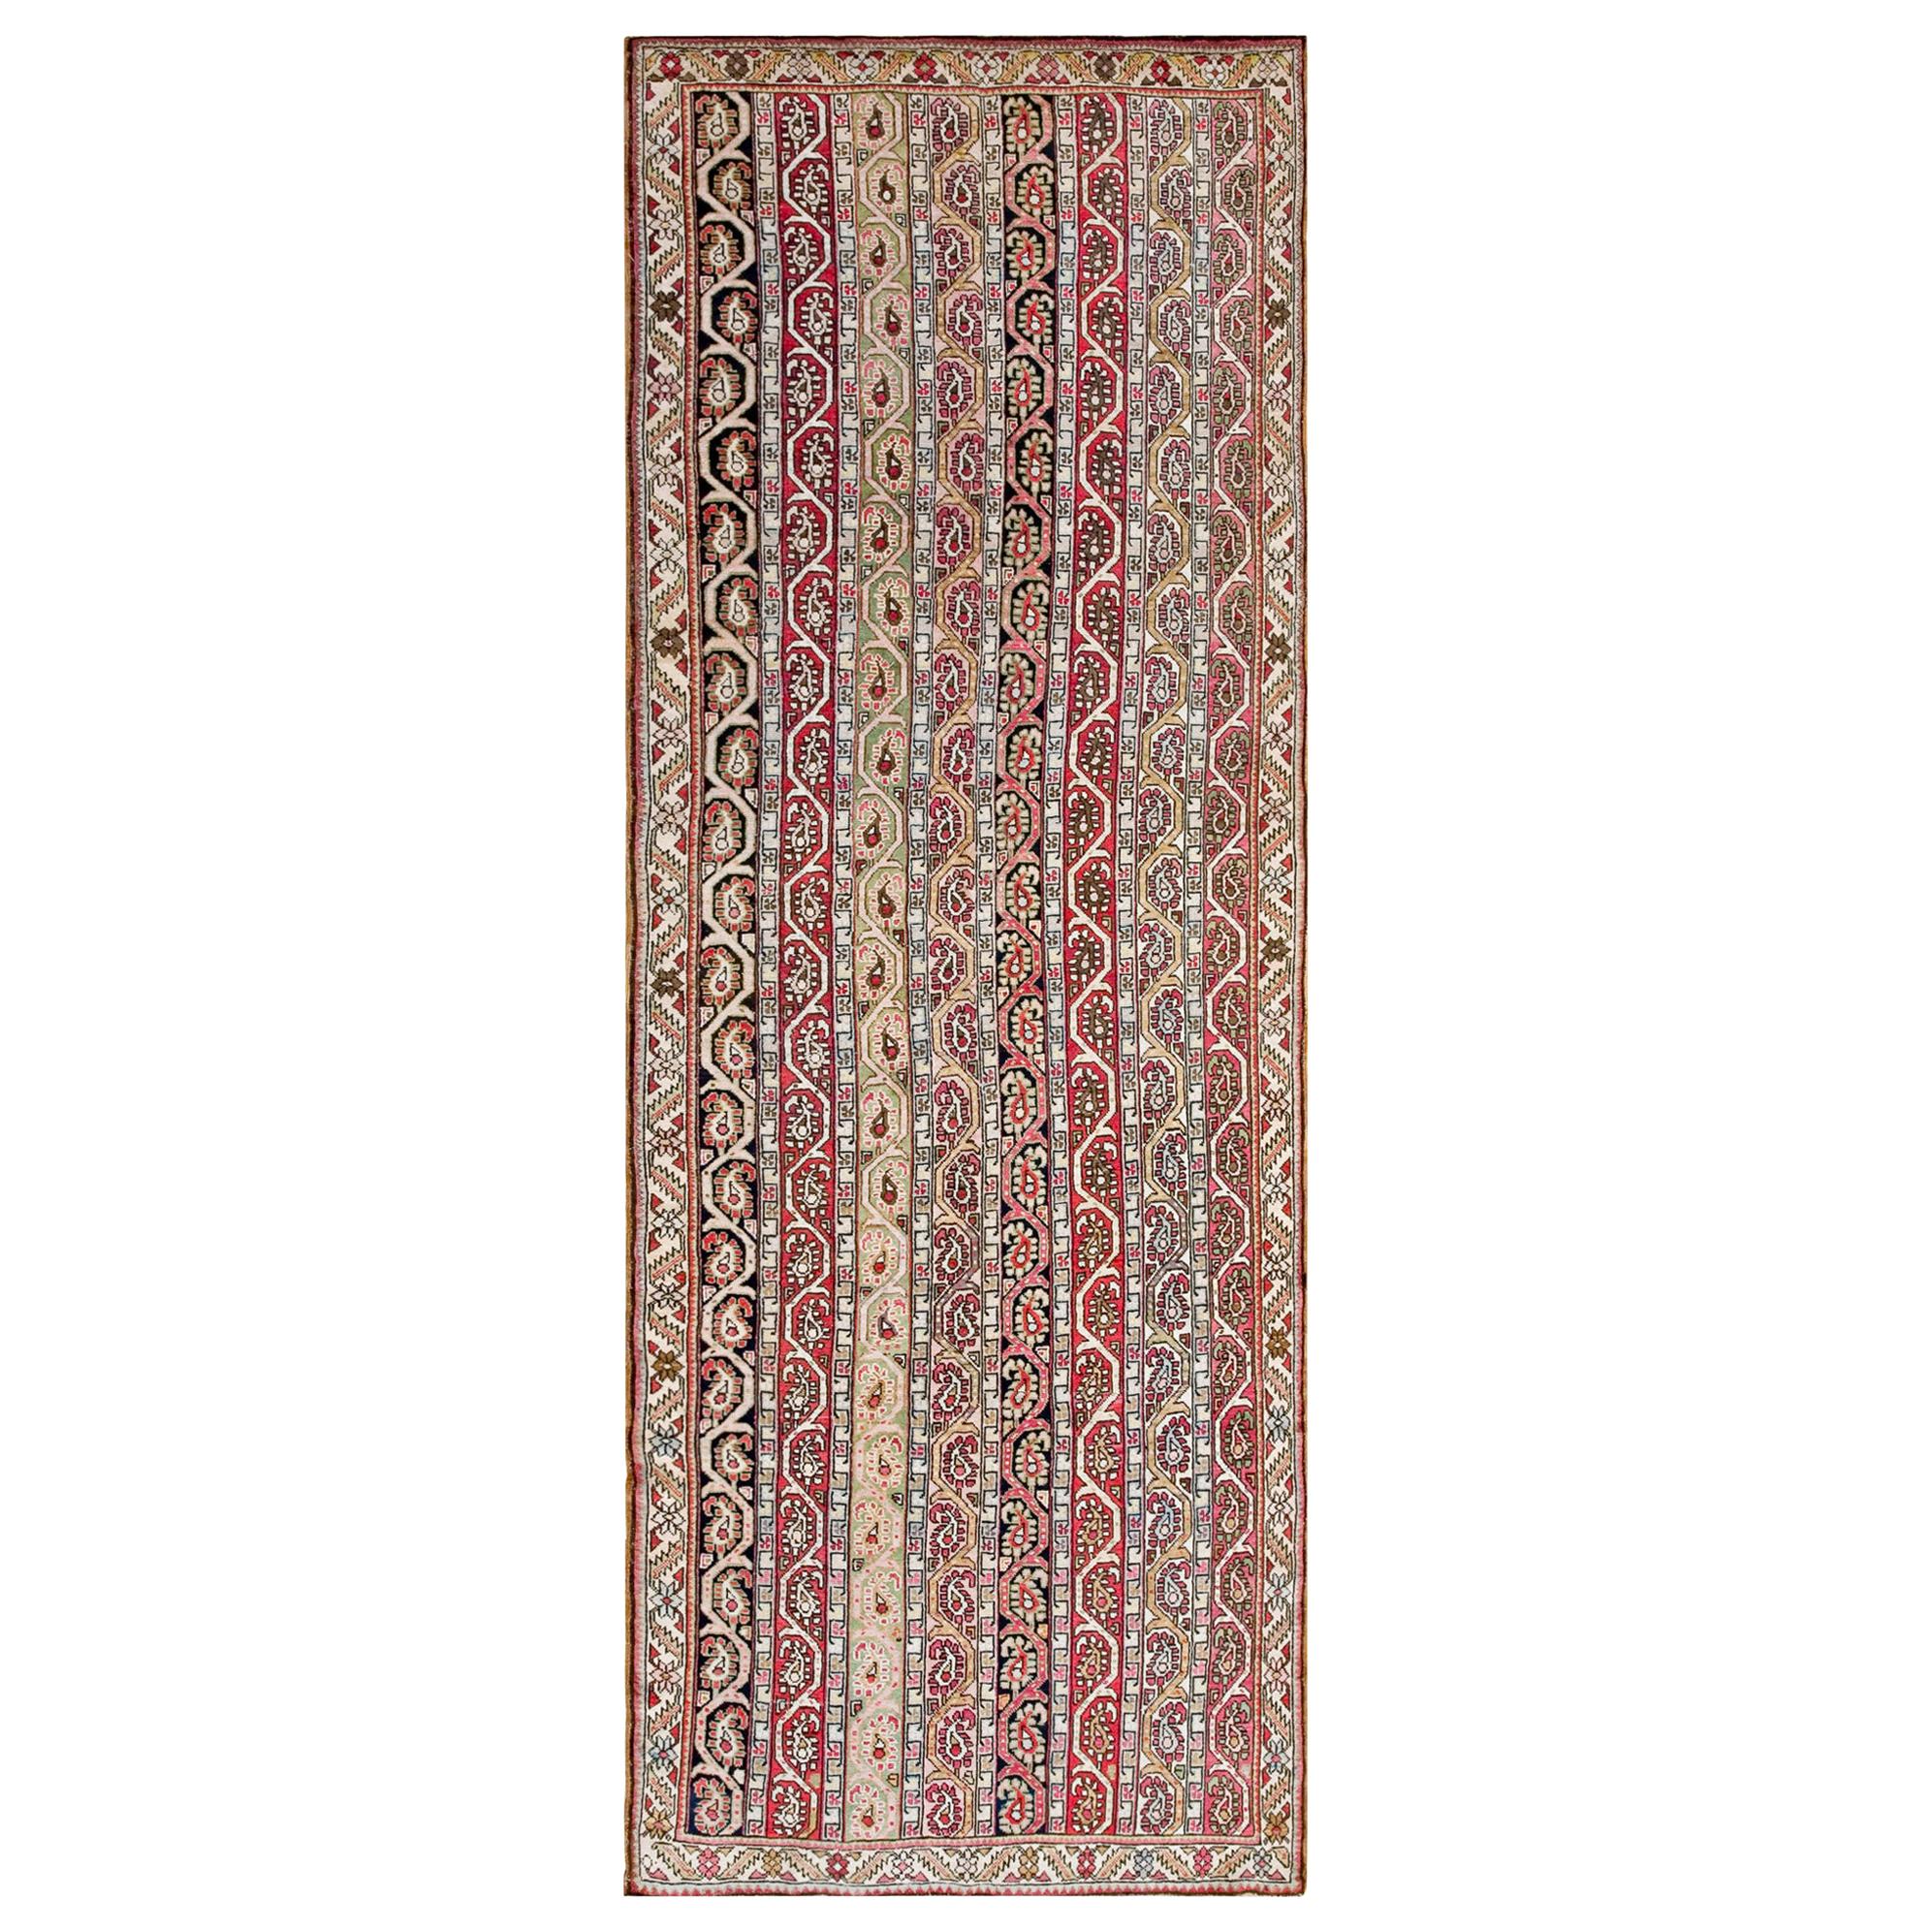 Tapis du 19ème siècle du Karabagh ( 4'2" x 11'8" - 127 x 356 )